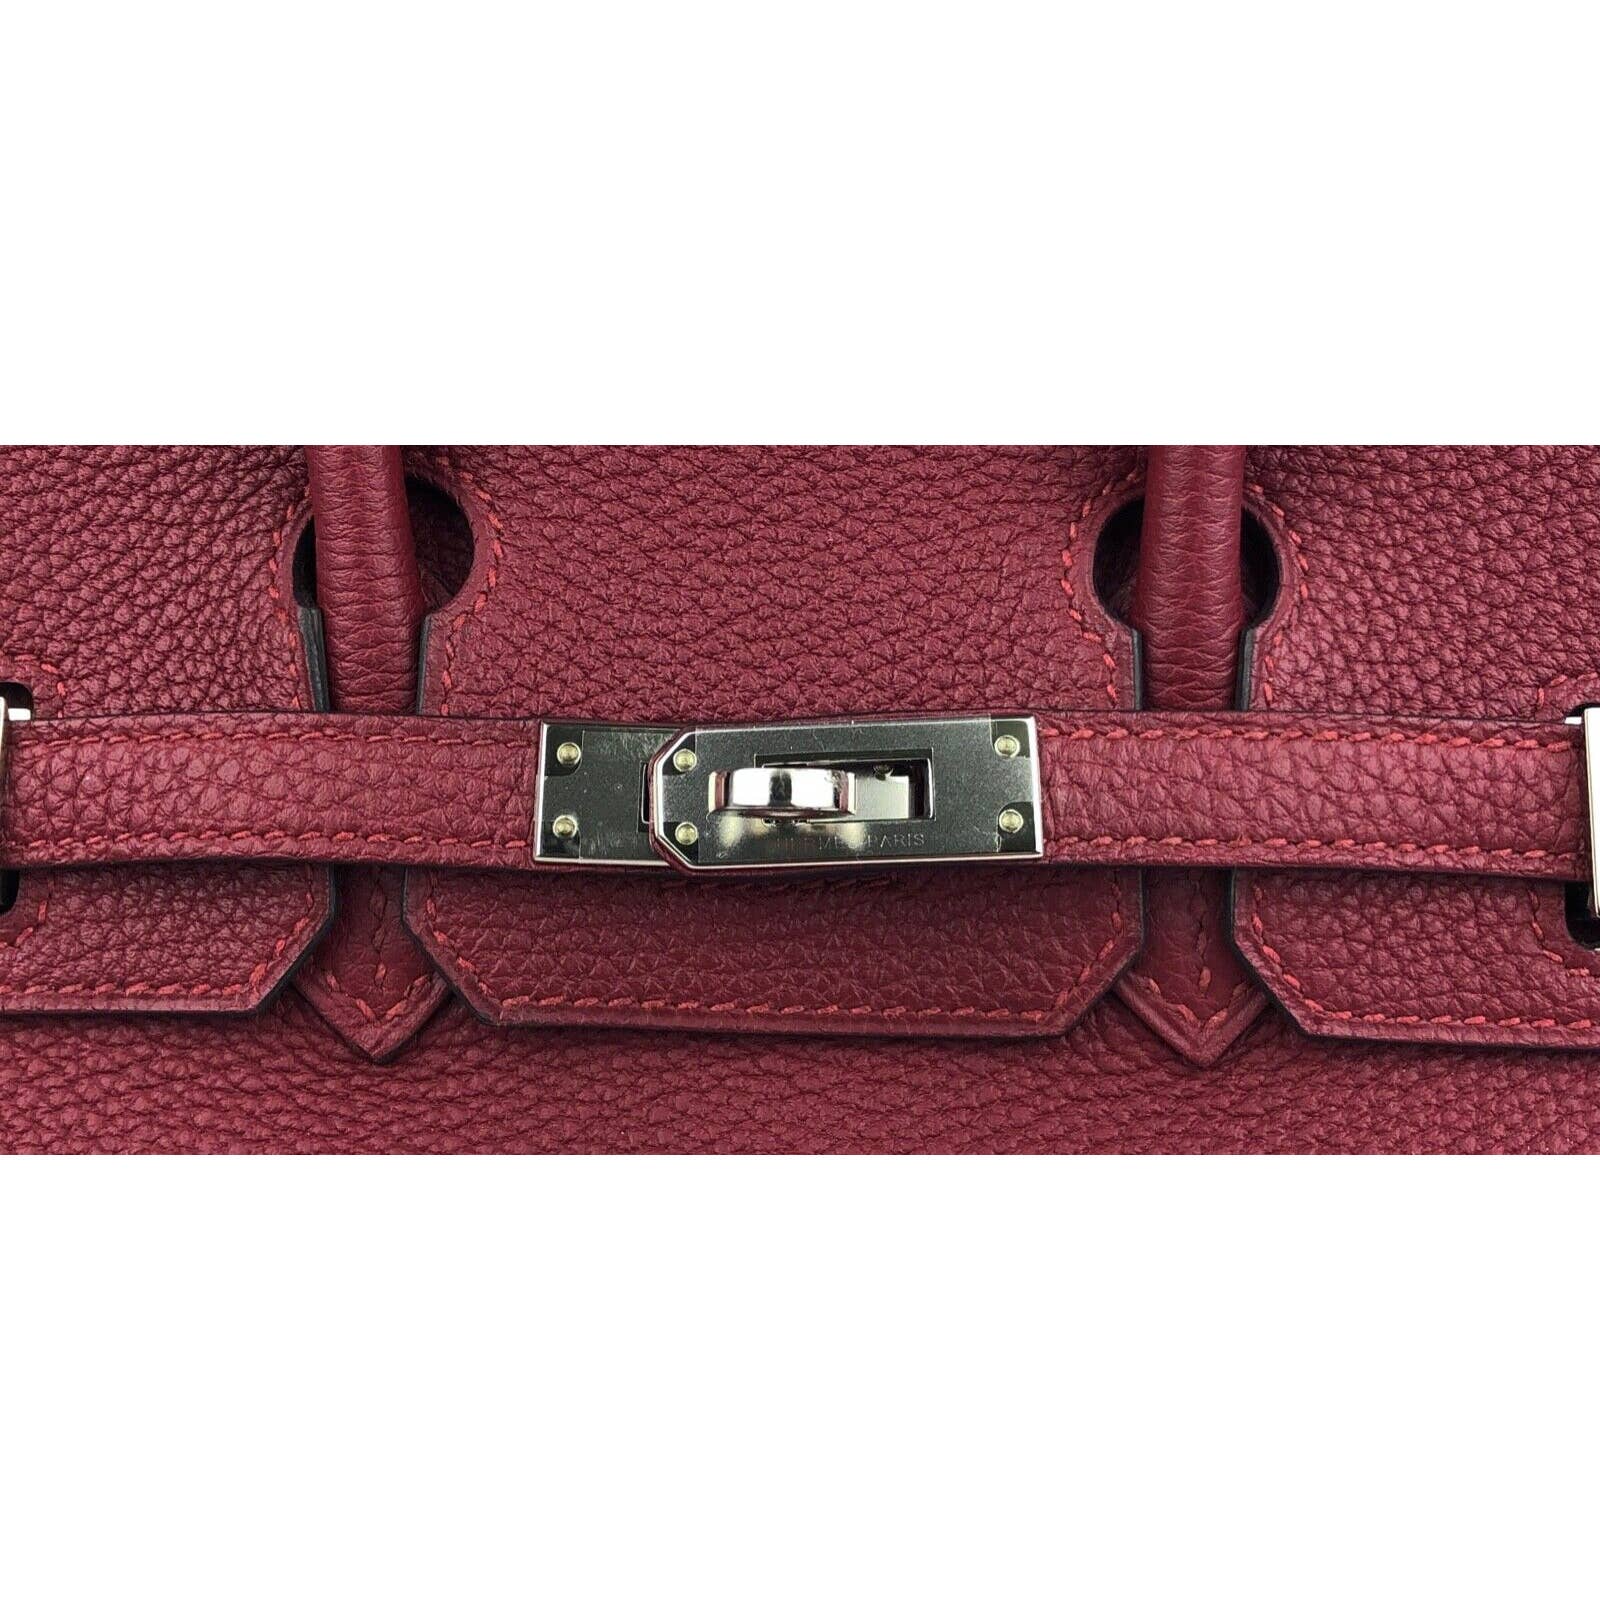 Hermes Rouge Grenat Togo Leather Palladium Hardware Birkin 30 Bag